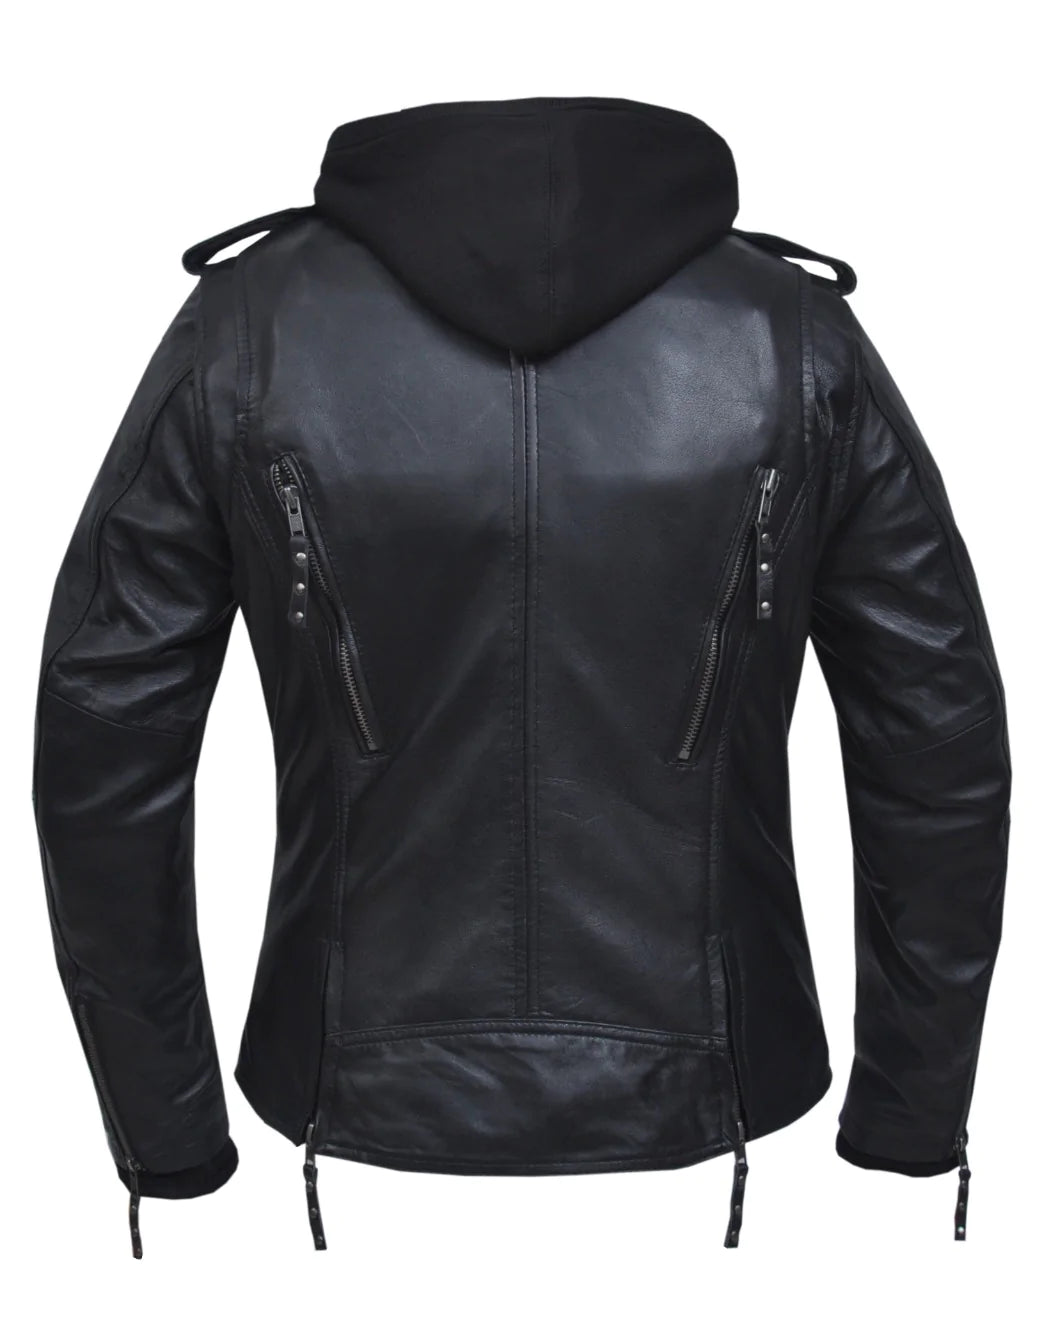 6841- Women's Hooded Black Leather Jacket